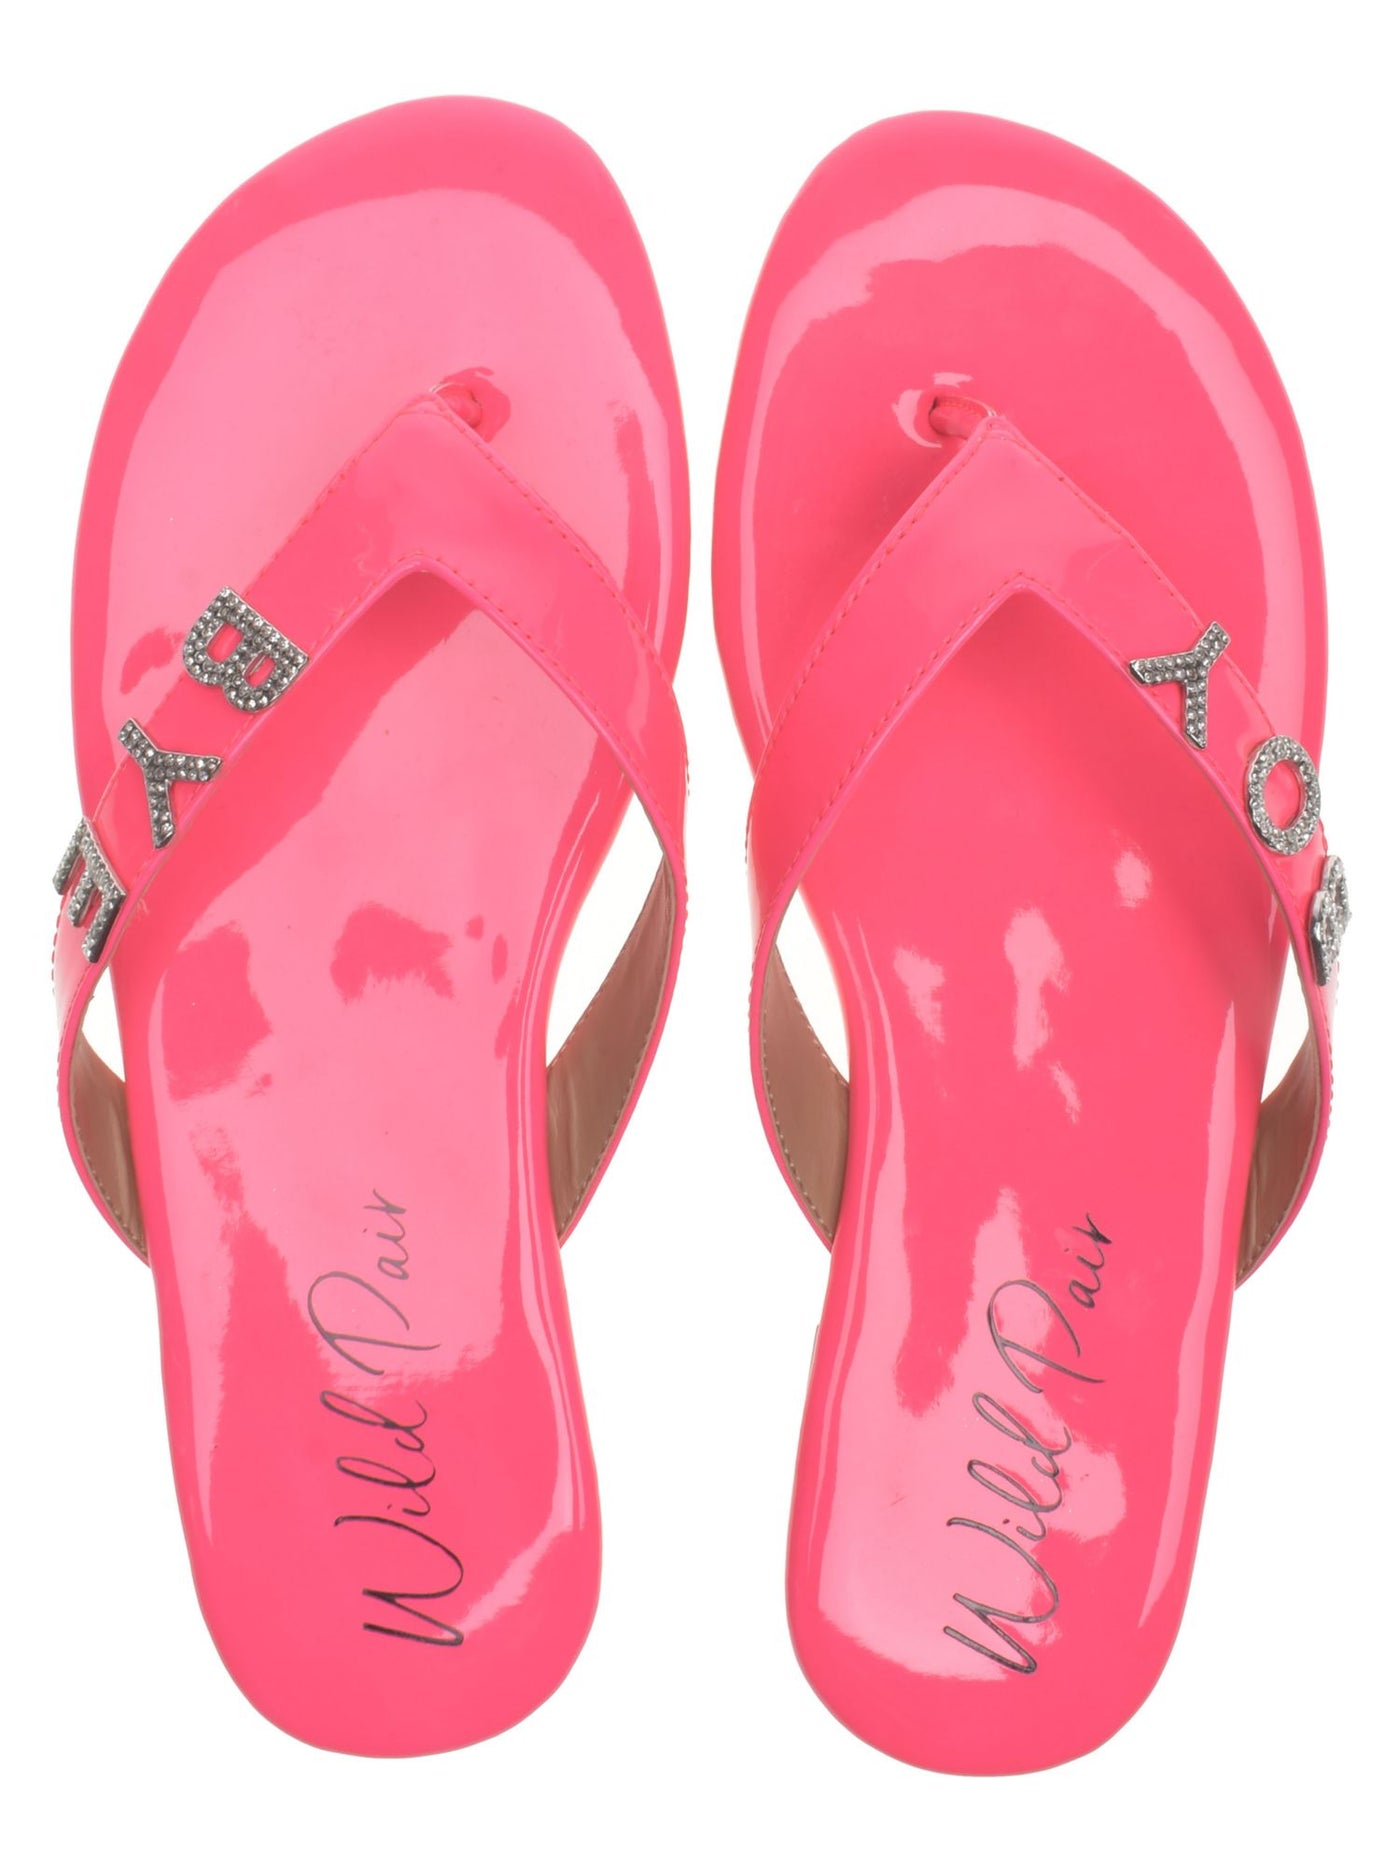 WILD PAIR Womens Pink Rhinestone Fantasia Round Toe Slip On Thong Sandals Shoes 5.5 M